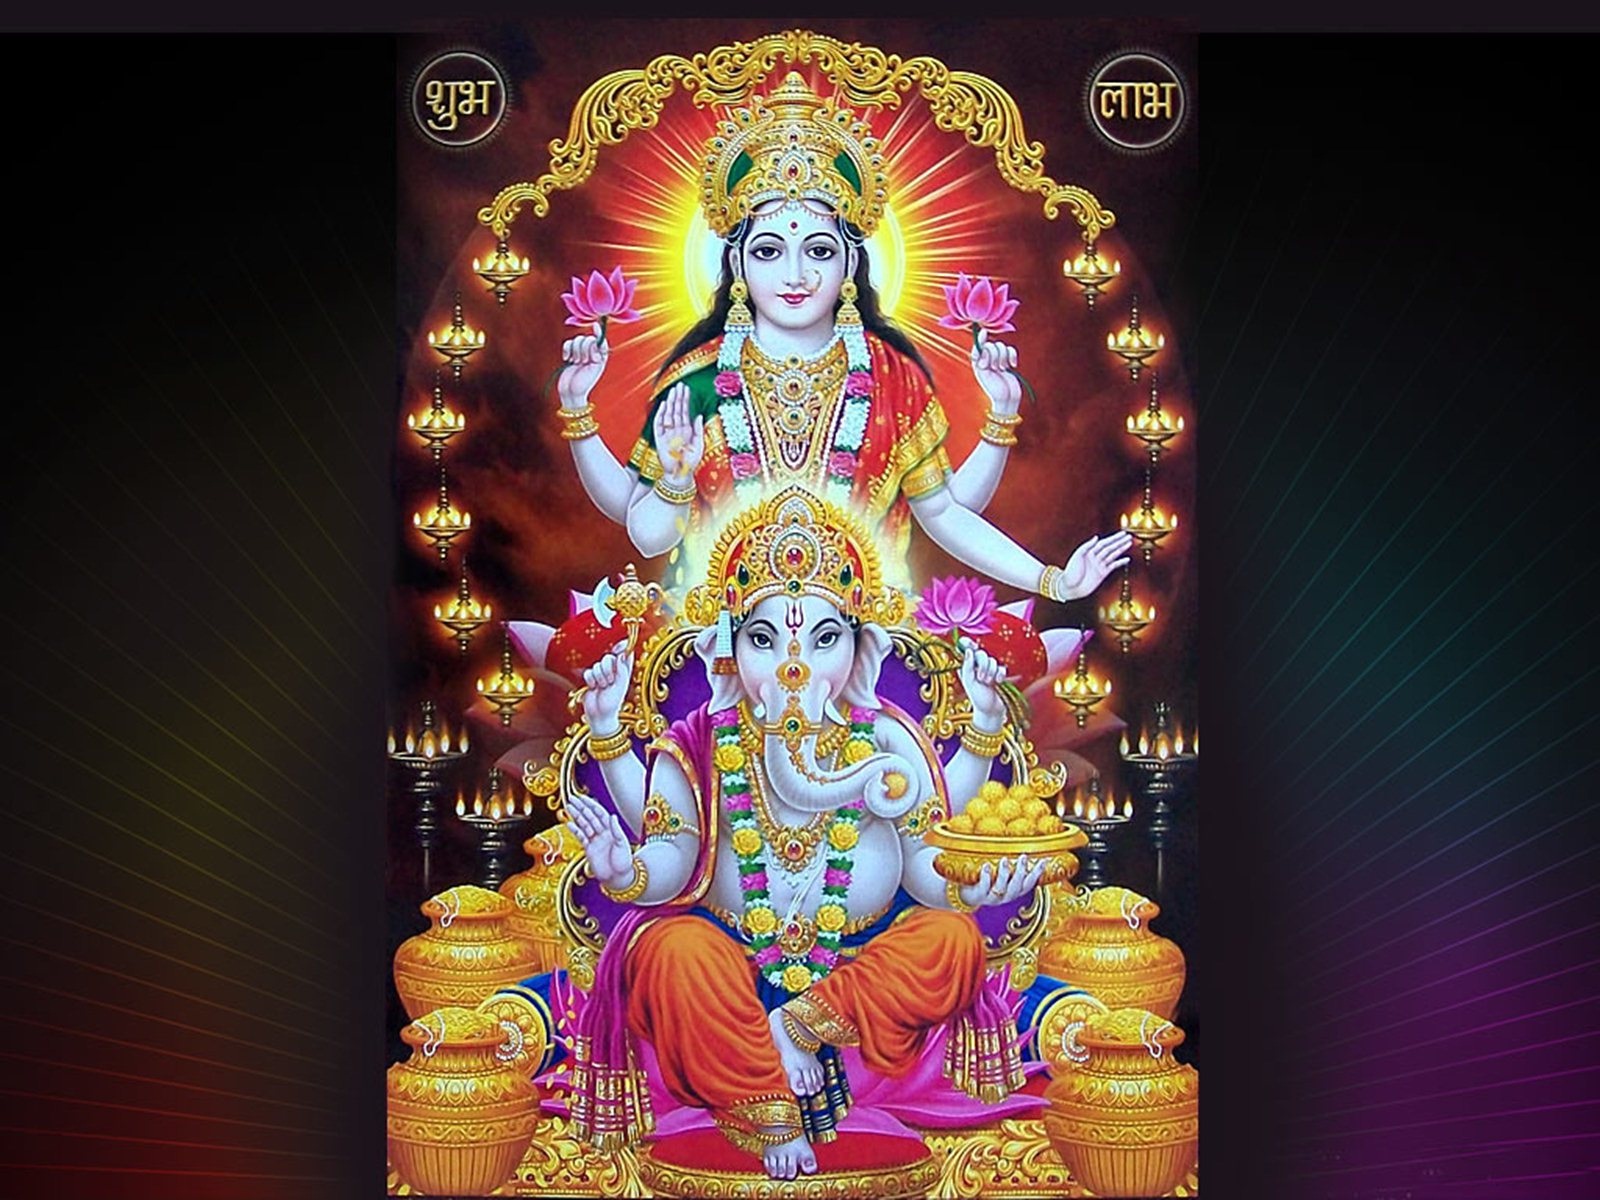 Download Free HD Wallpapers of Maa laxmi(lakshmi) Devi ...